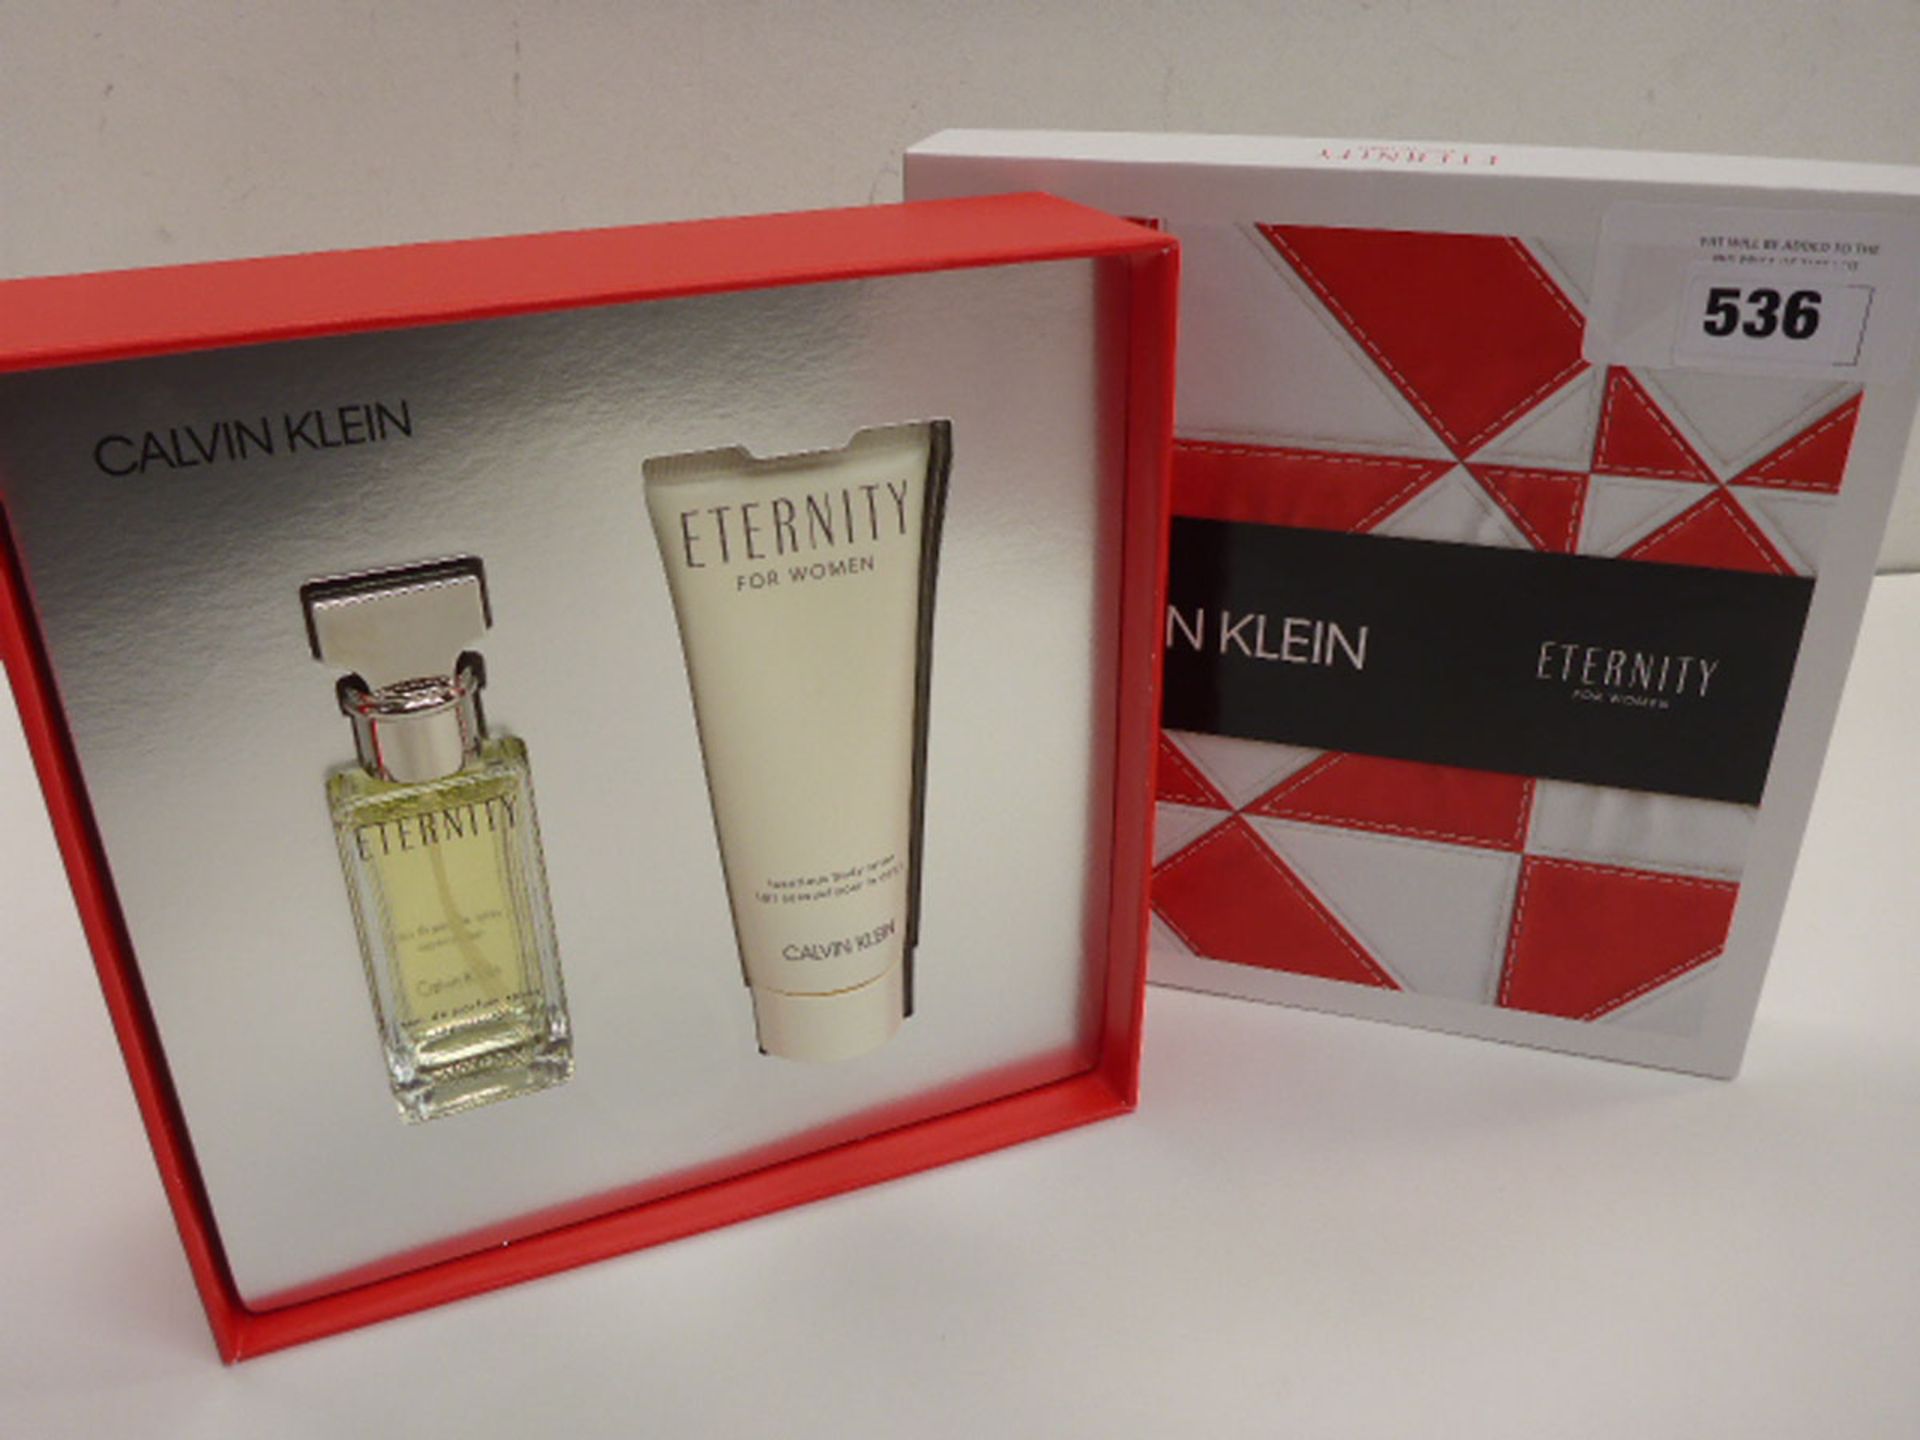 Calvin Klein Eternity for women eau de parfum & body lotion gift box set